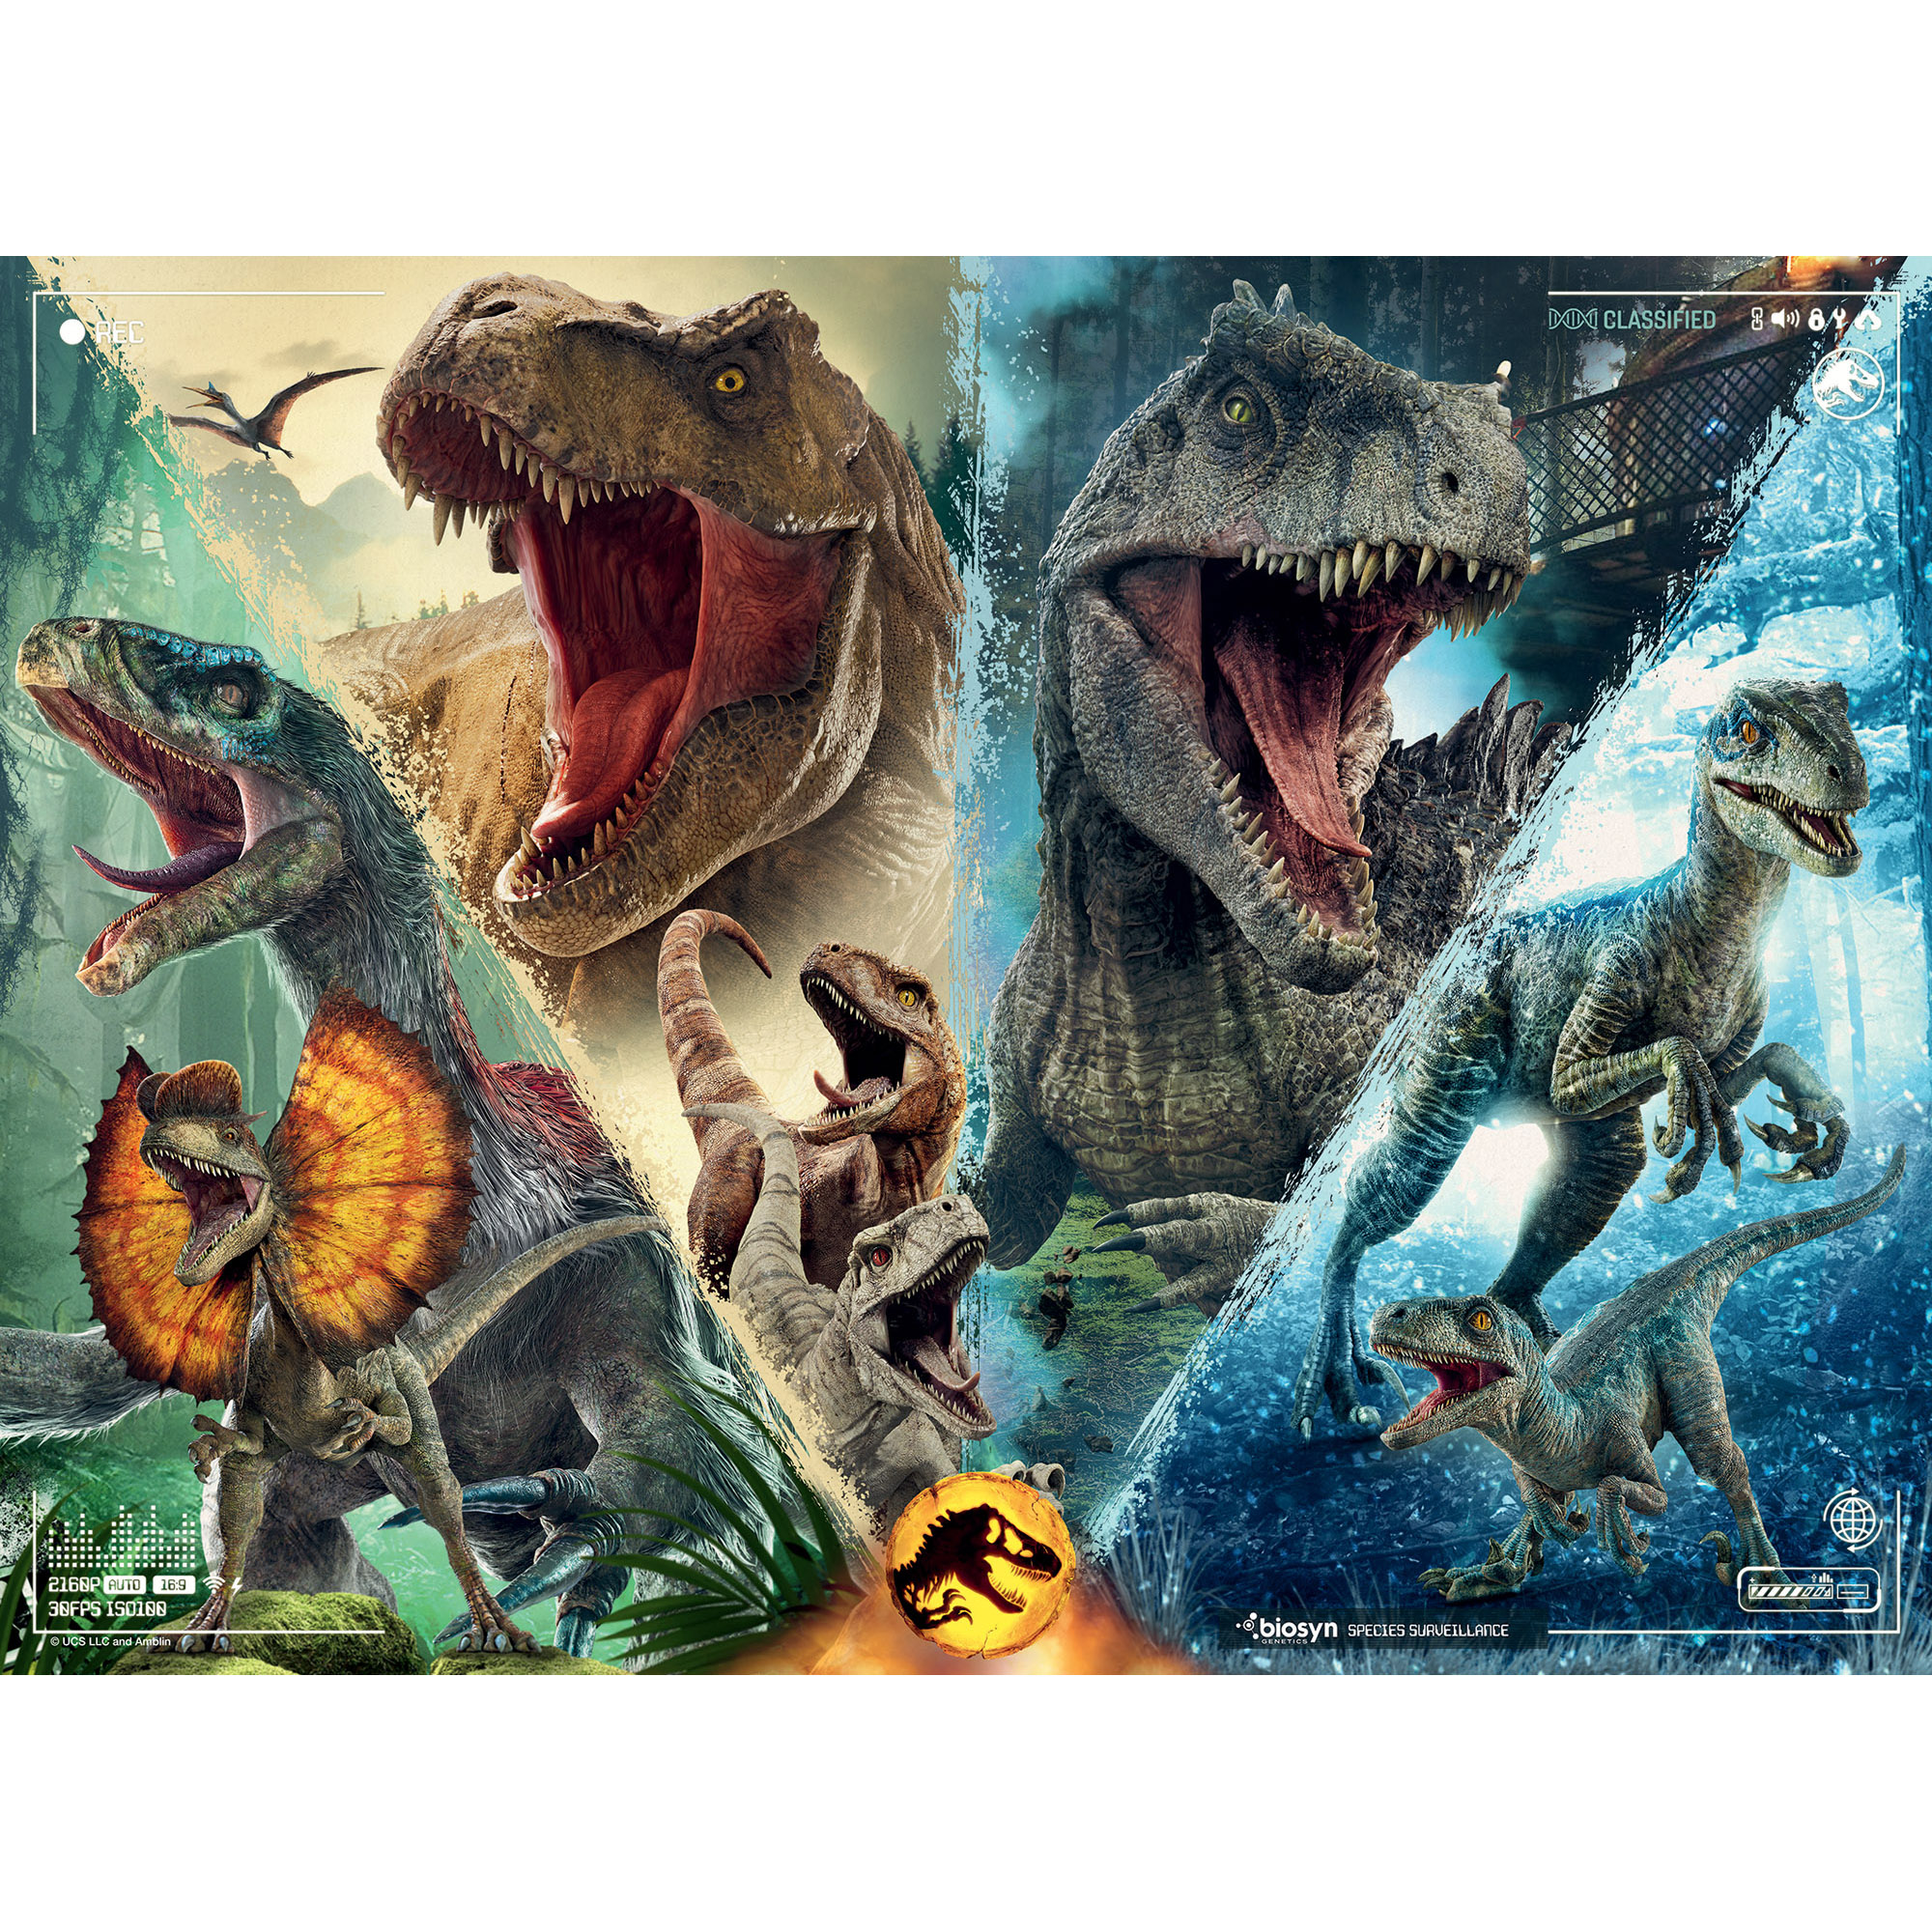 Ravensburger - puzzle jurassic world, 100 pezzi xxl, età raccomandata 6+ anni - Jurassic World, RAVENSBURGER